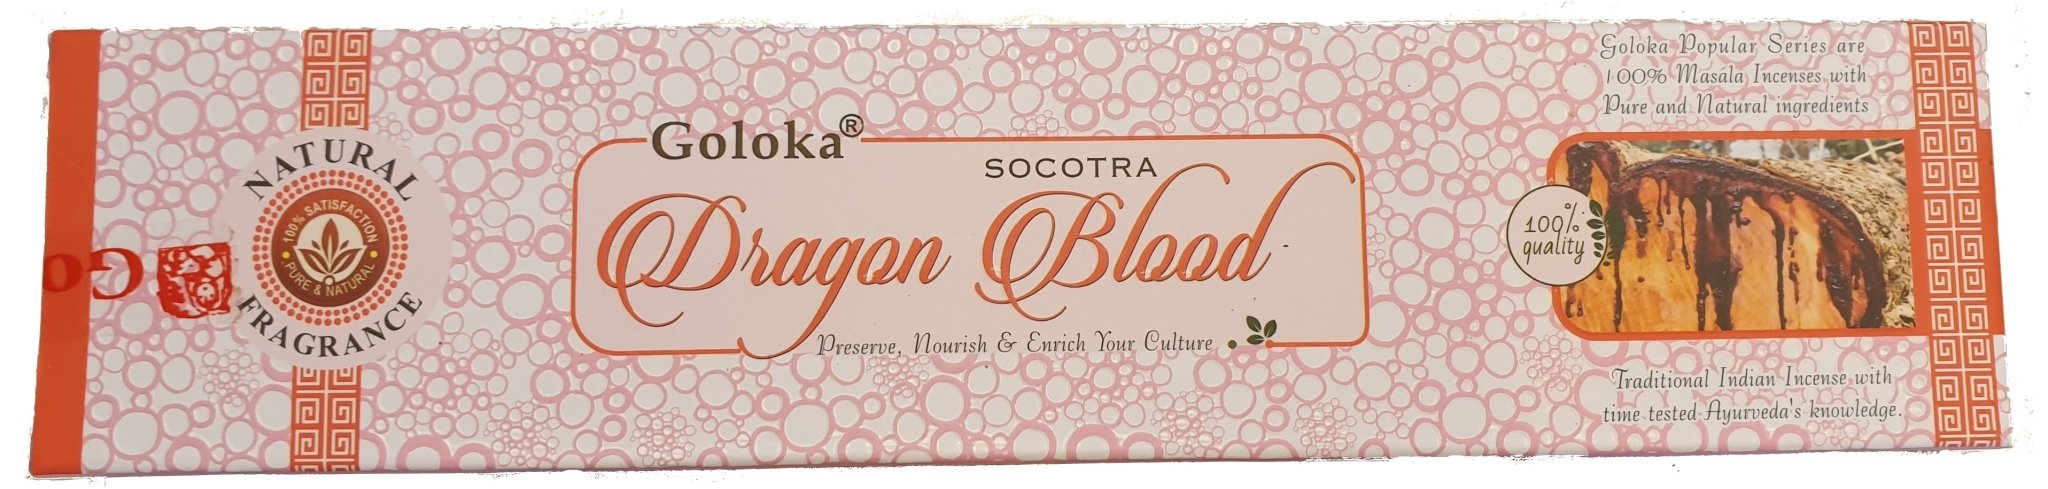 Goloka "Dragon Blood" Natural Fragrance - Das Raeucherwerk